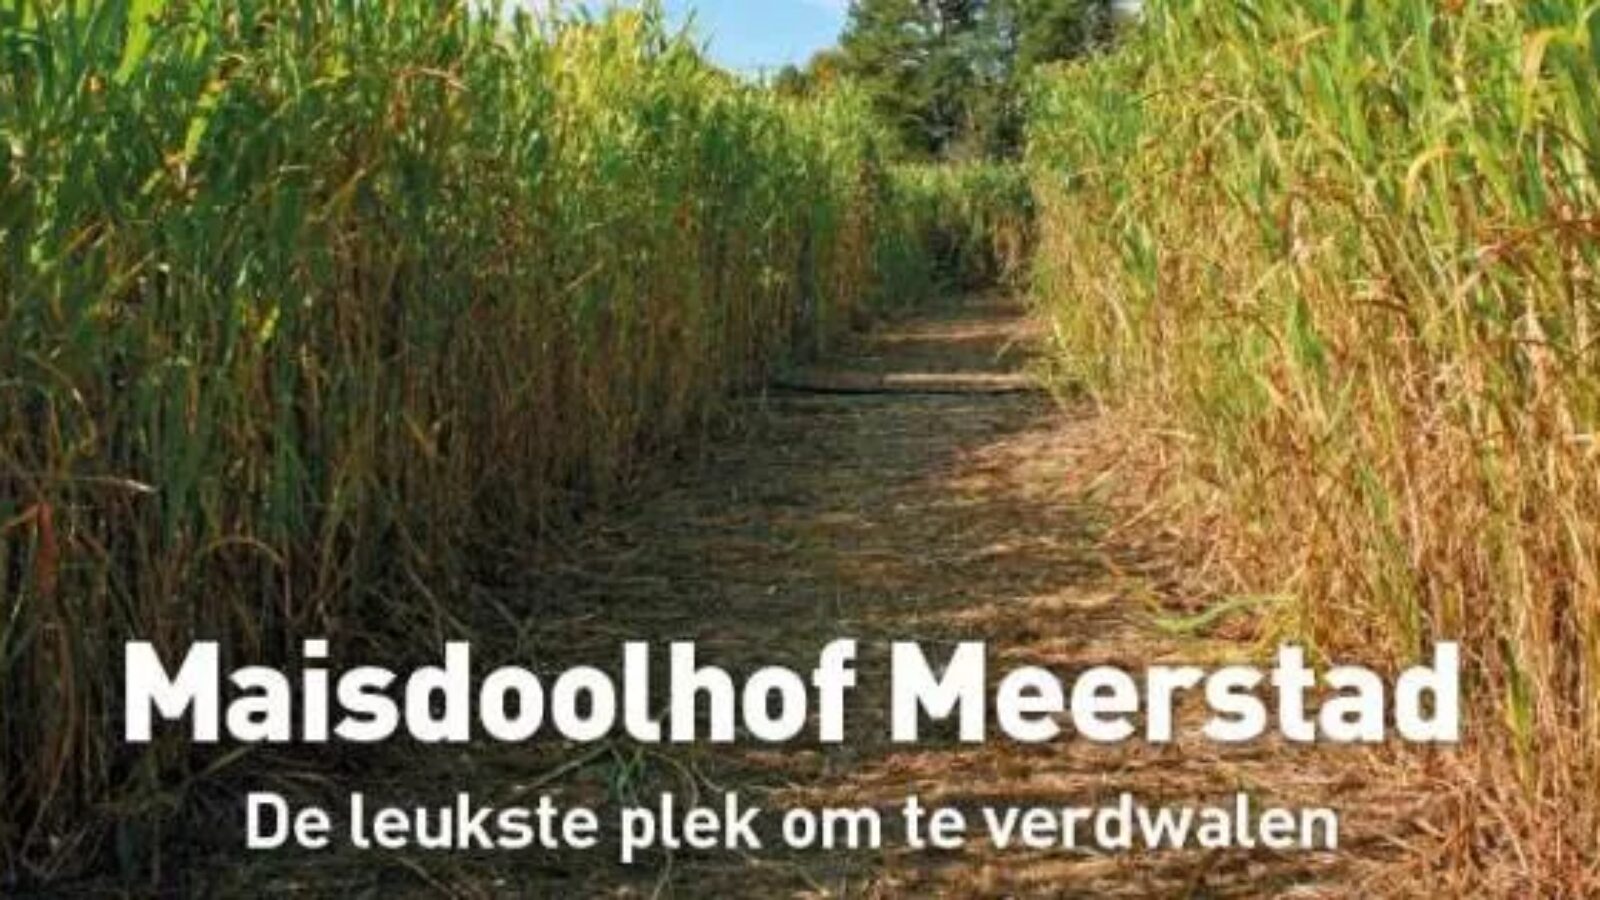 Zaterdag 2 augustus: opening Maisdoolhof Meerstad!